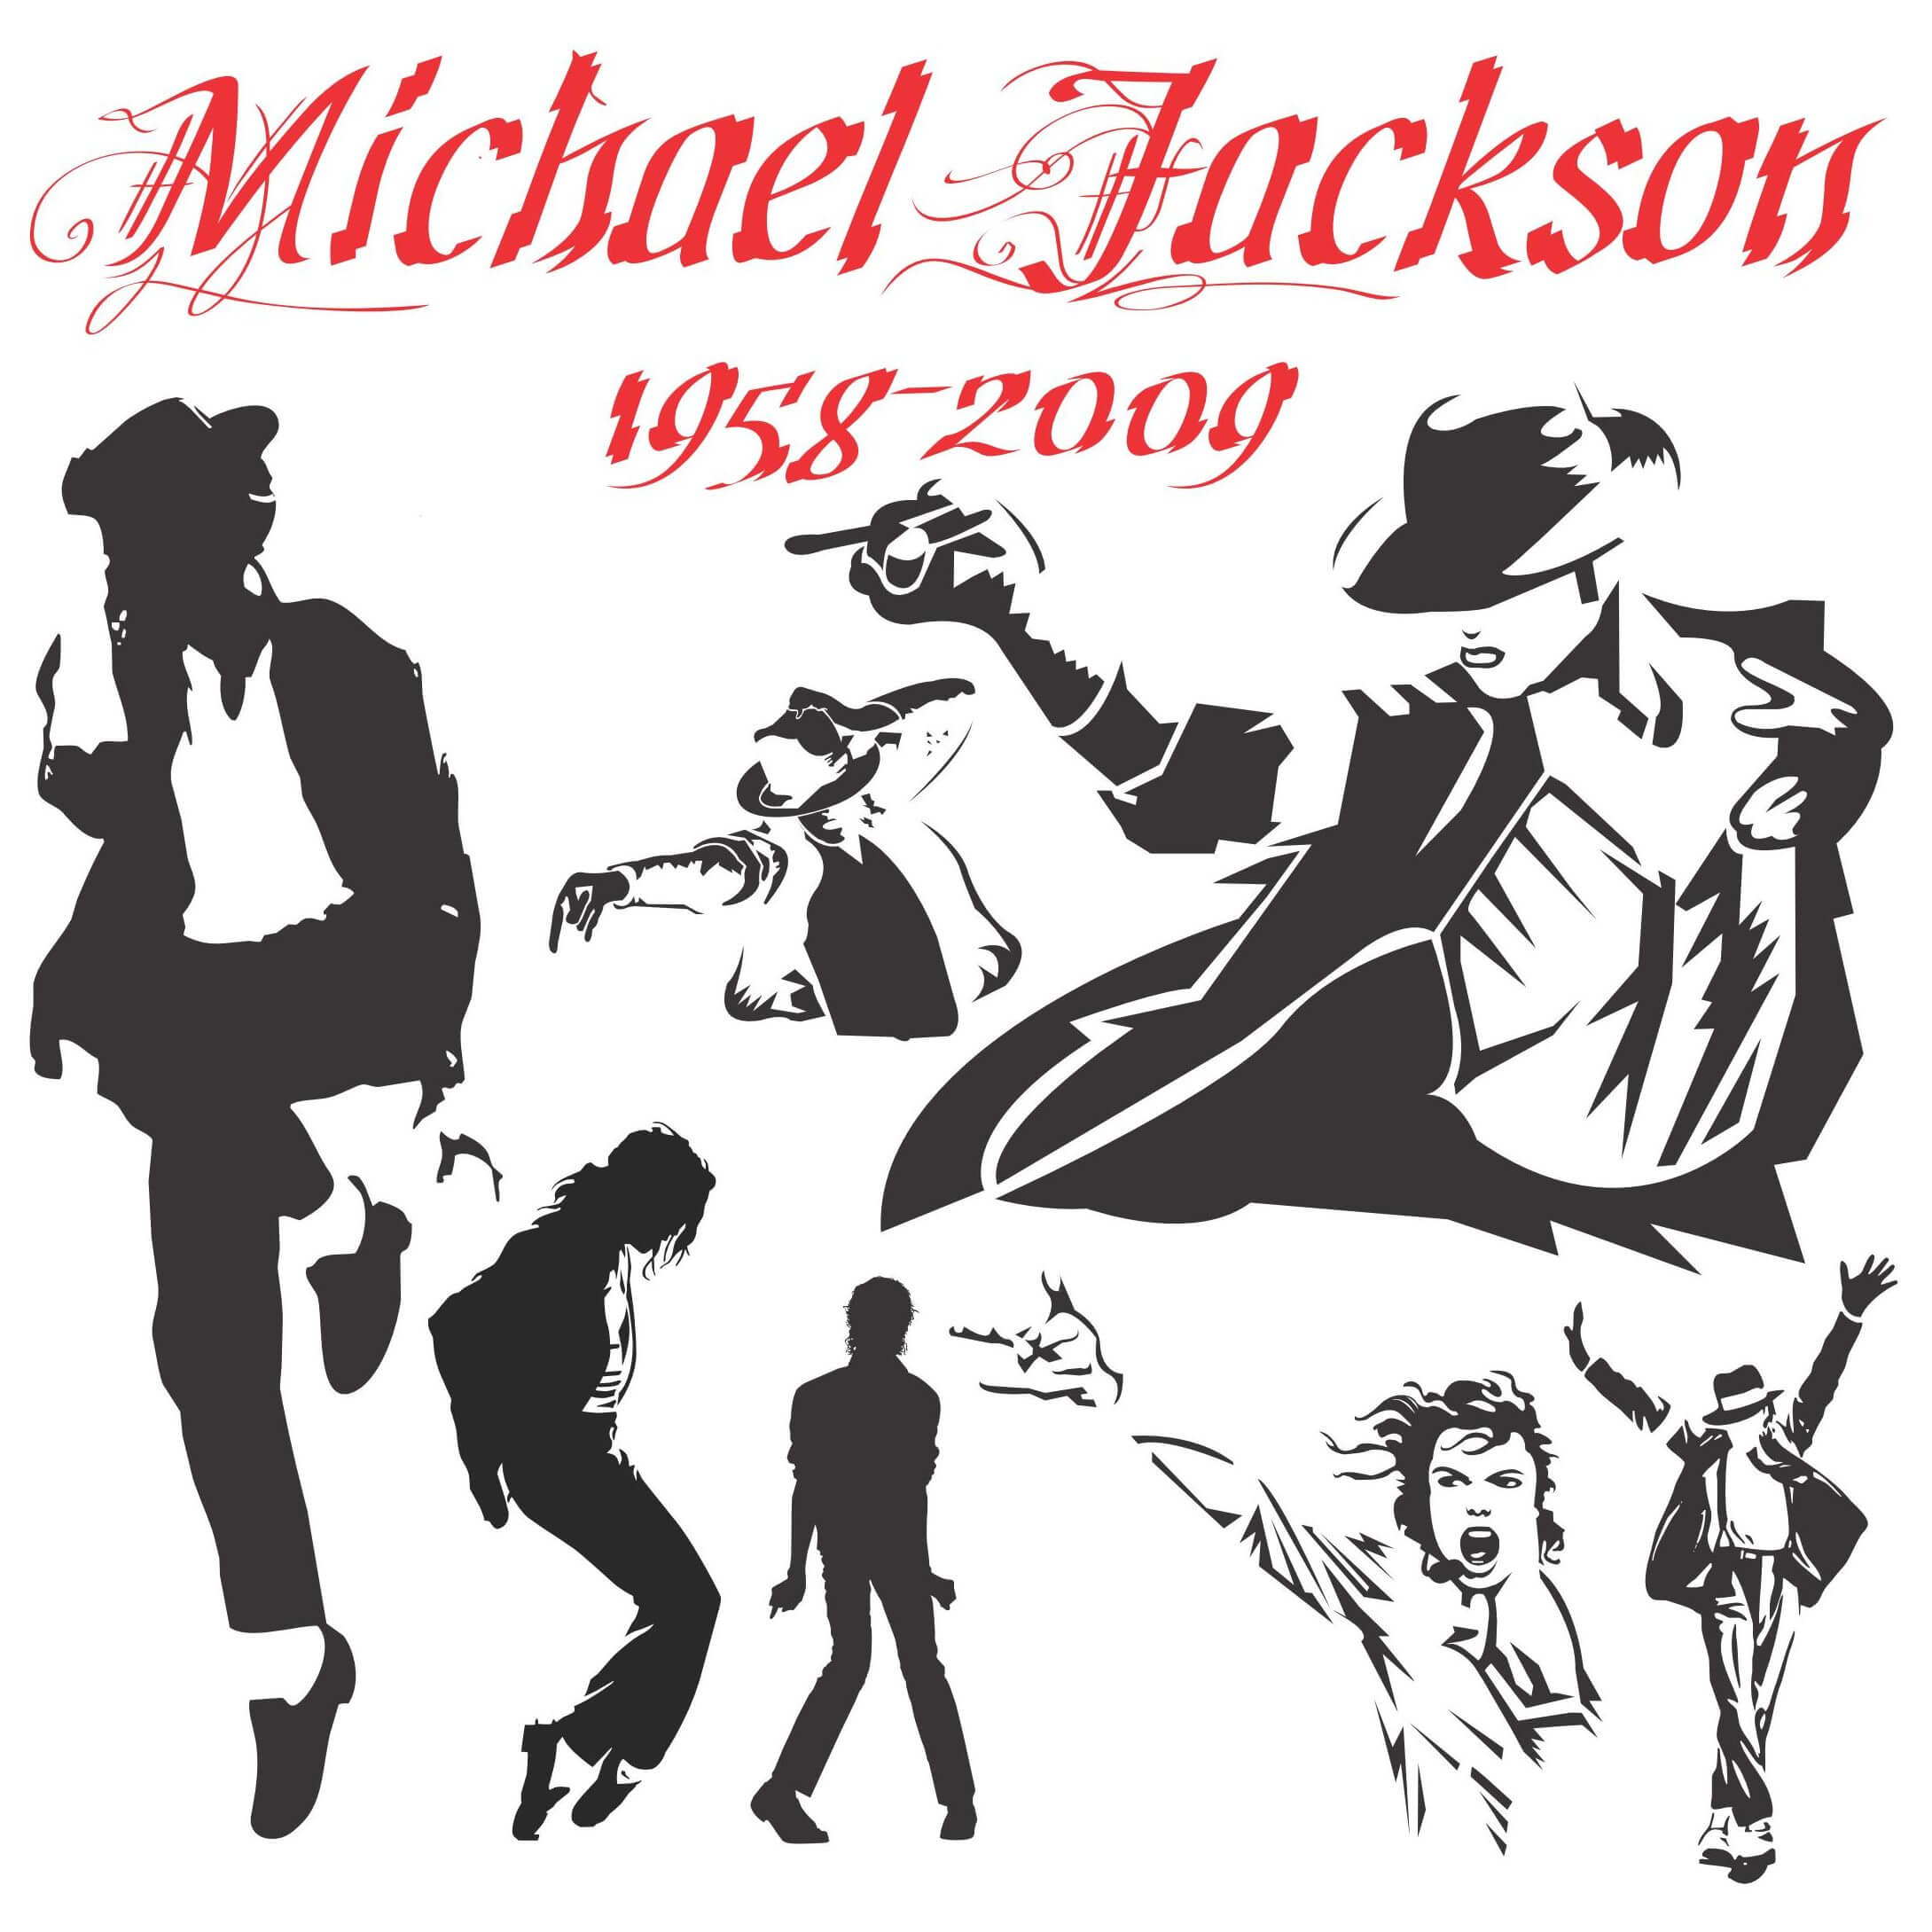 Michael Jackson Silhouettes [EPS File]